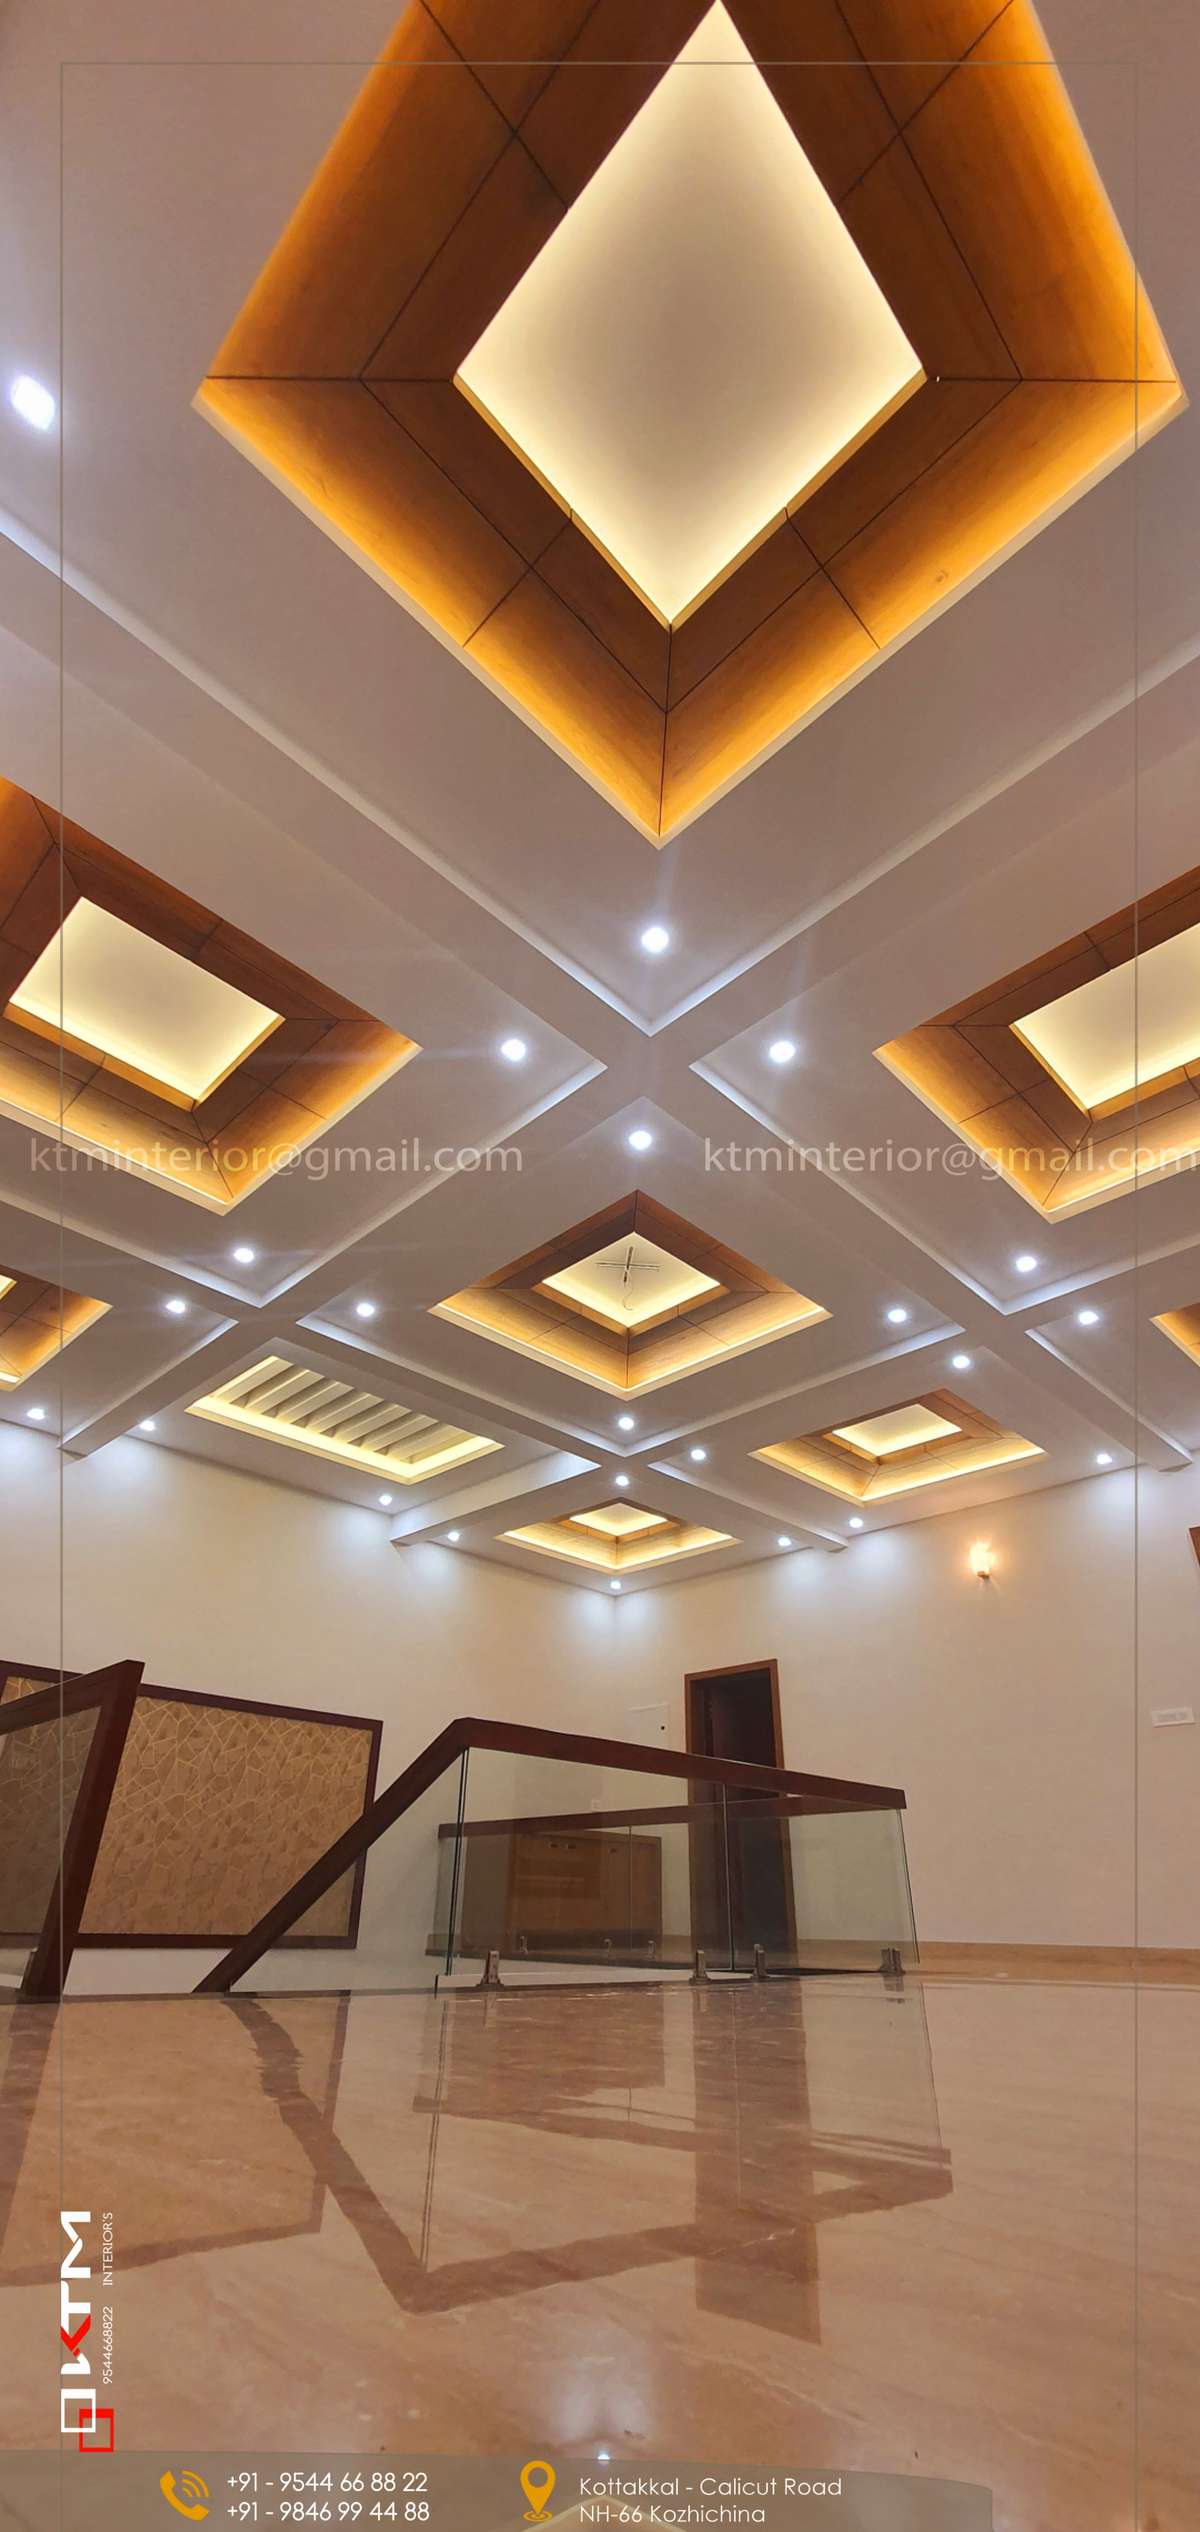 falls Ceiling 
Gupsum , Plywood With Venneer

 #ktm_interiors